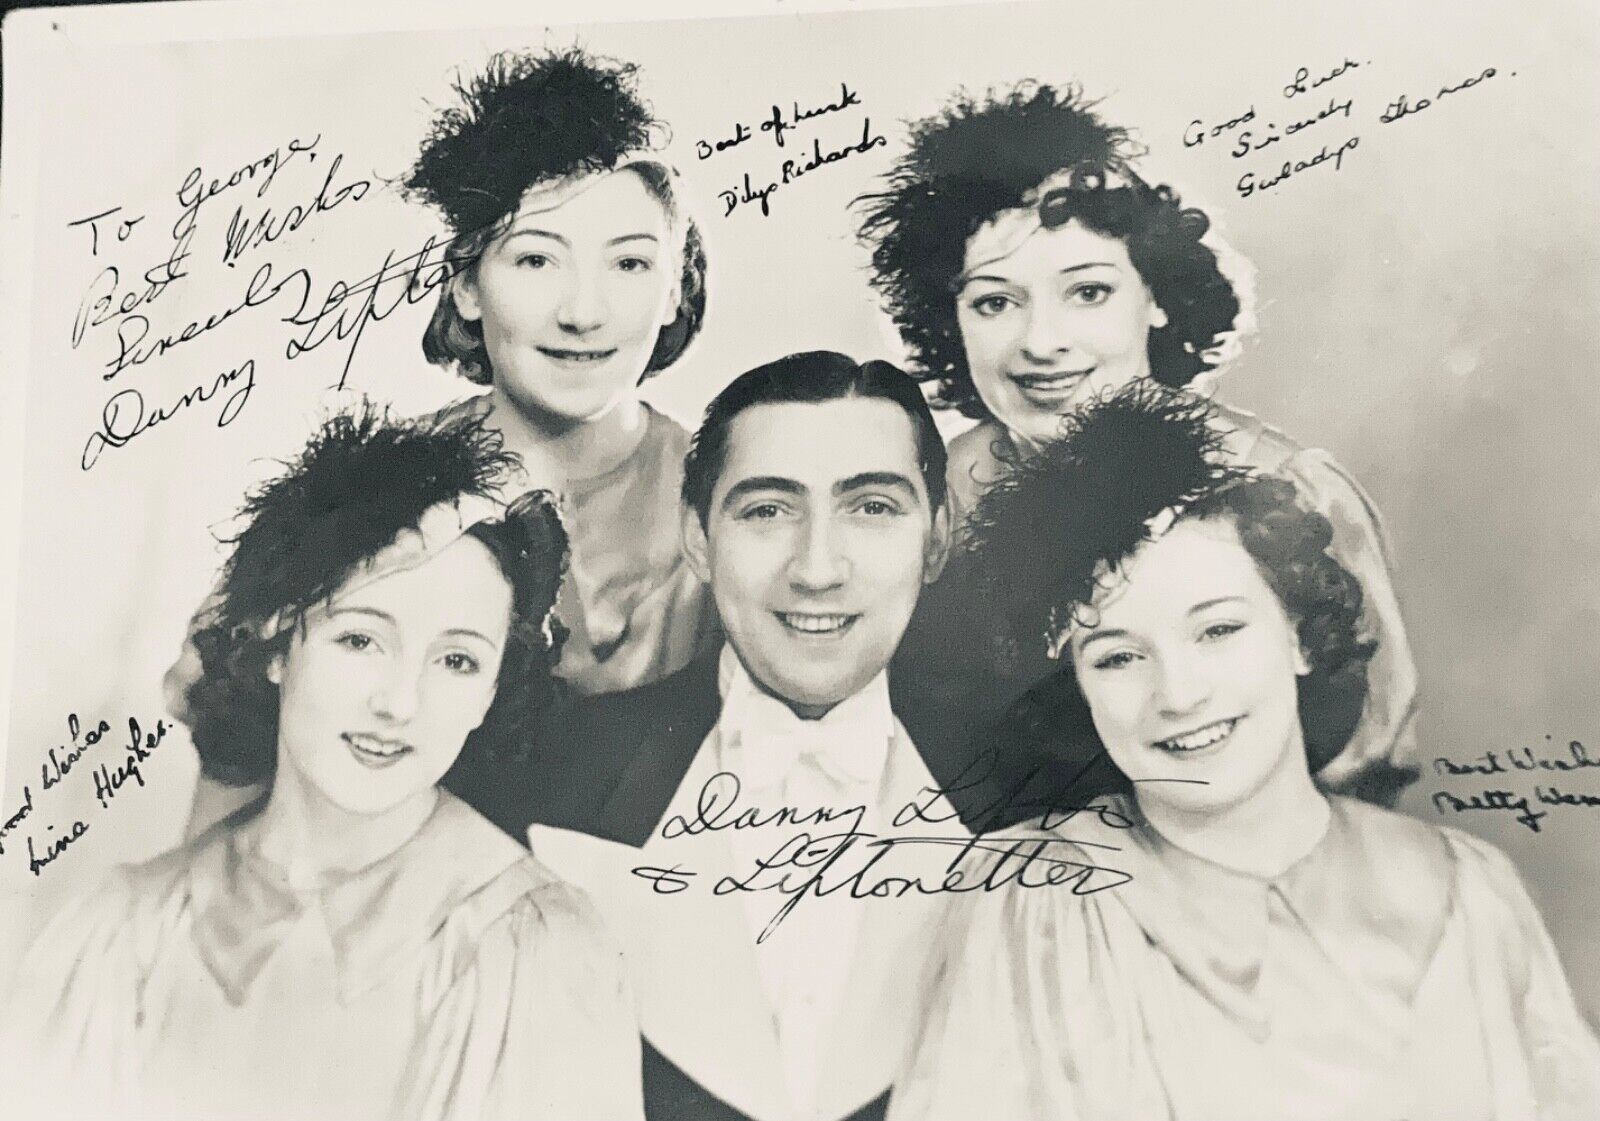 Danny Lipton & The Liptonelles 1930’s Dancers  Signed Approx 10 x 8 Photo